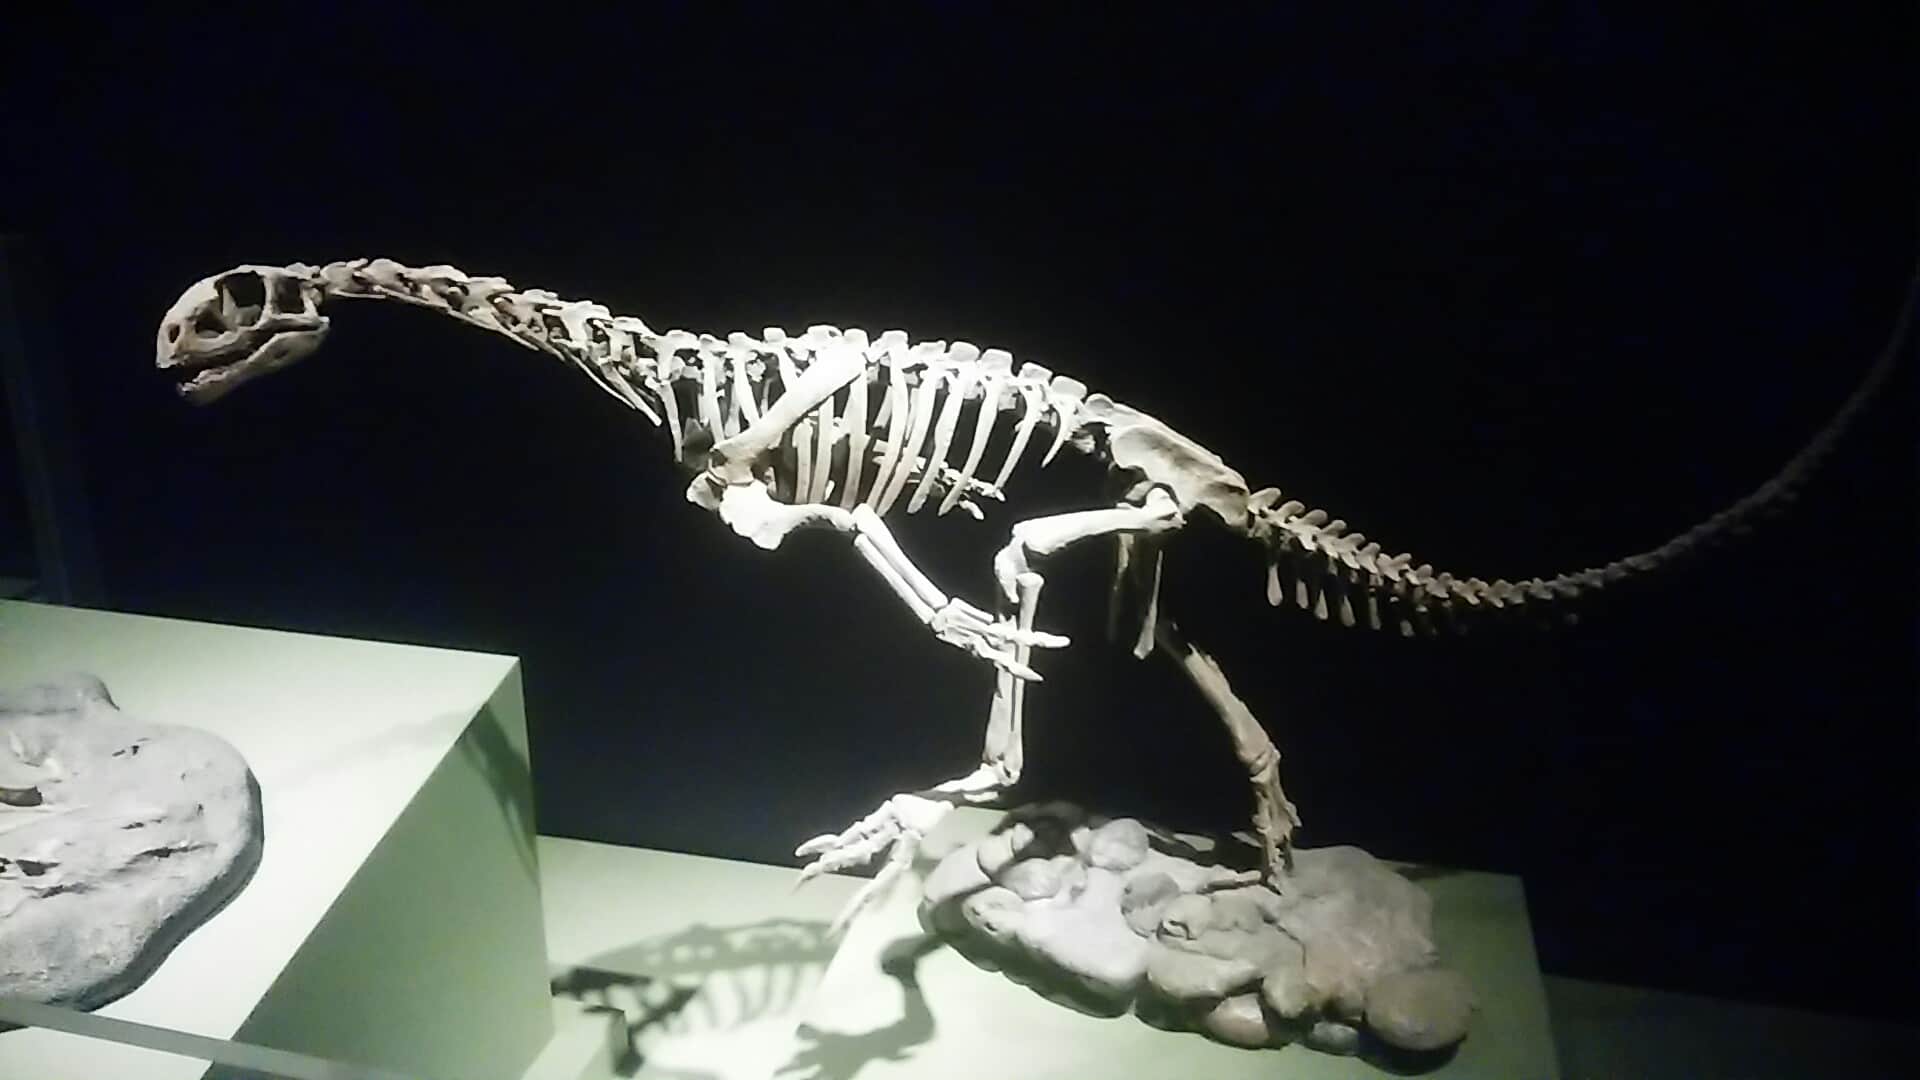 A Chilesaurus diegosarez skeleton (model)